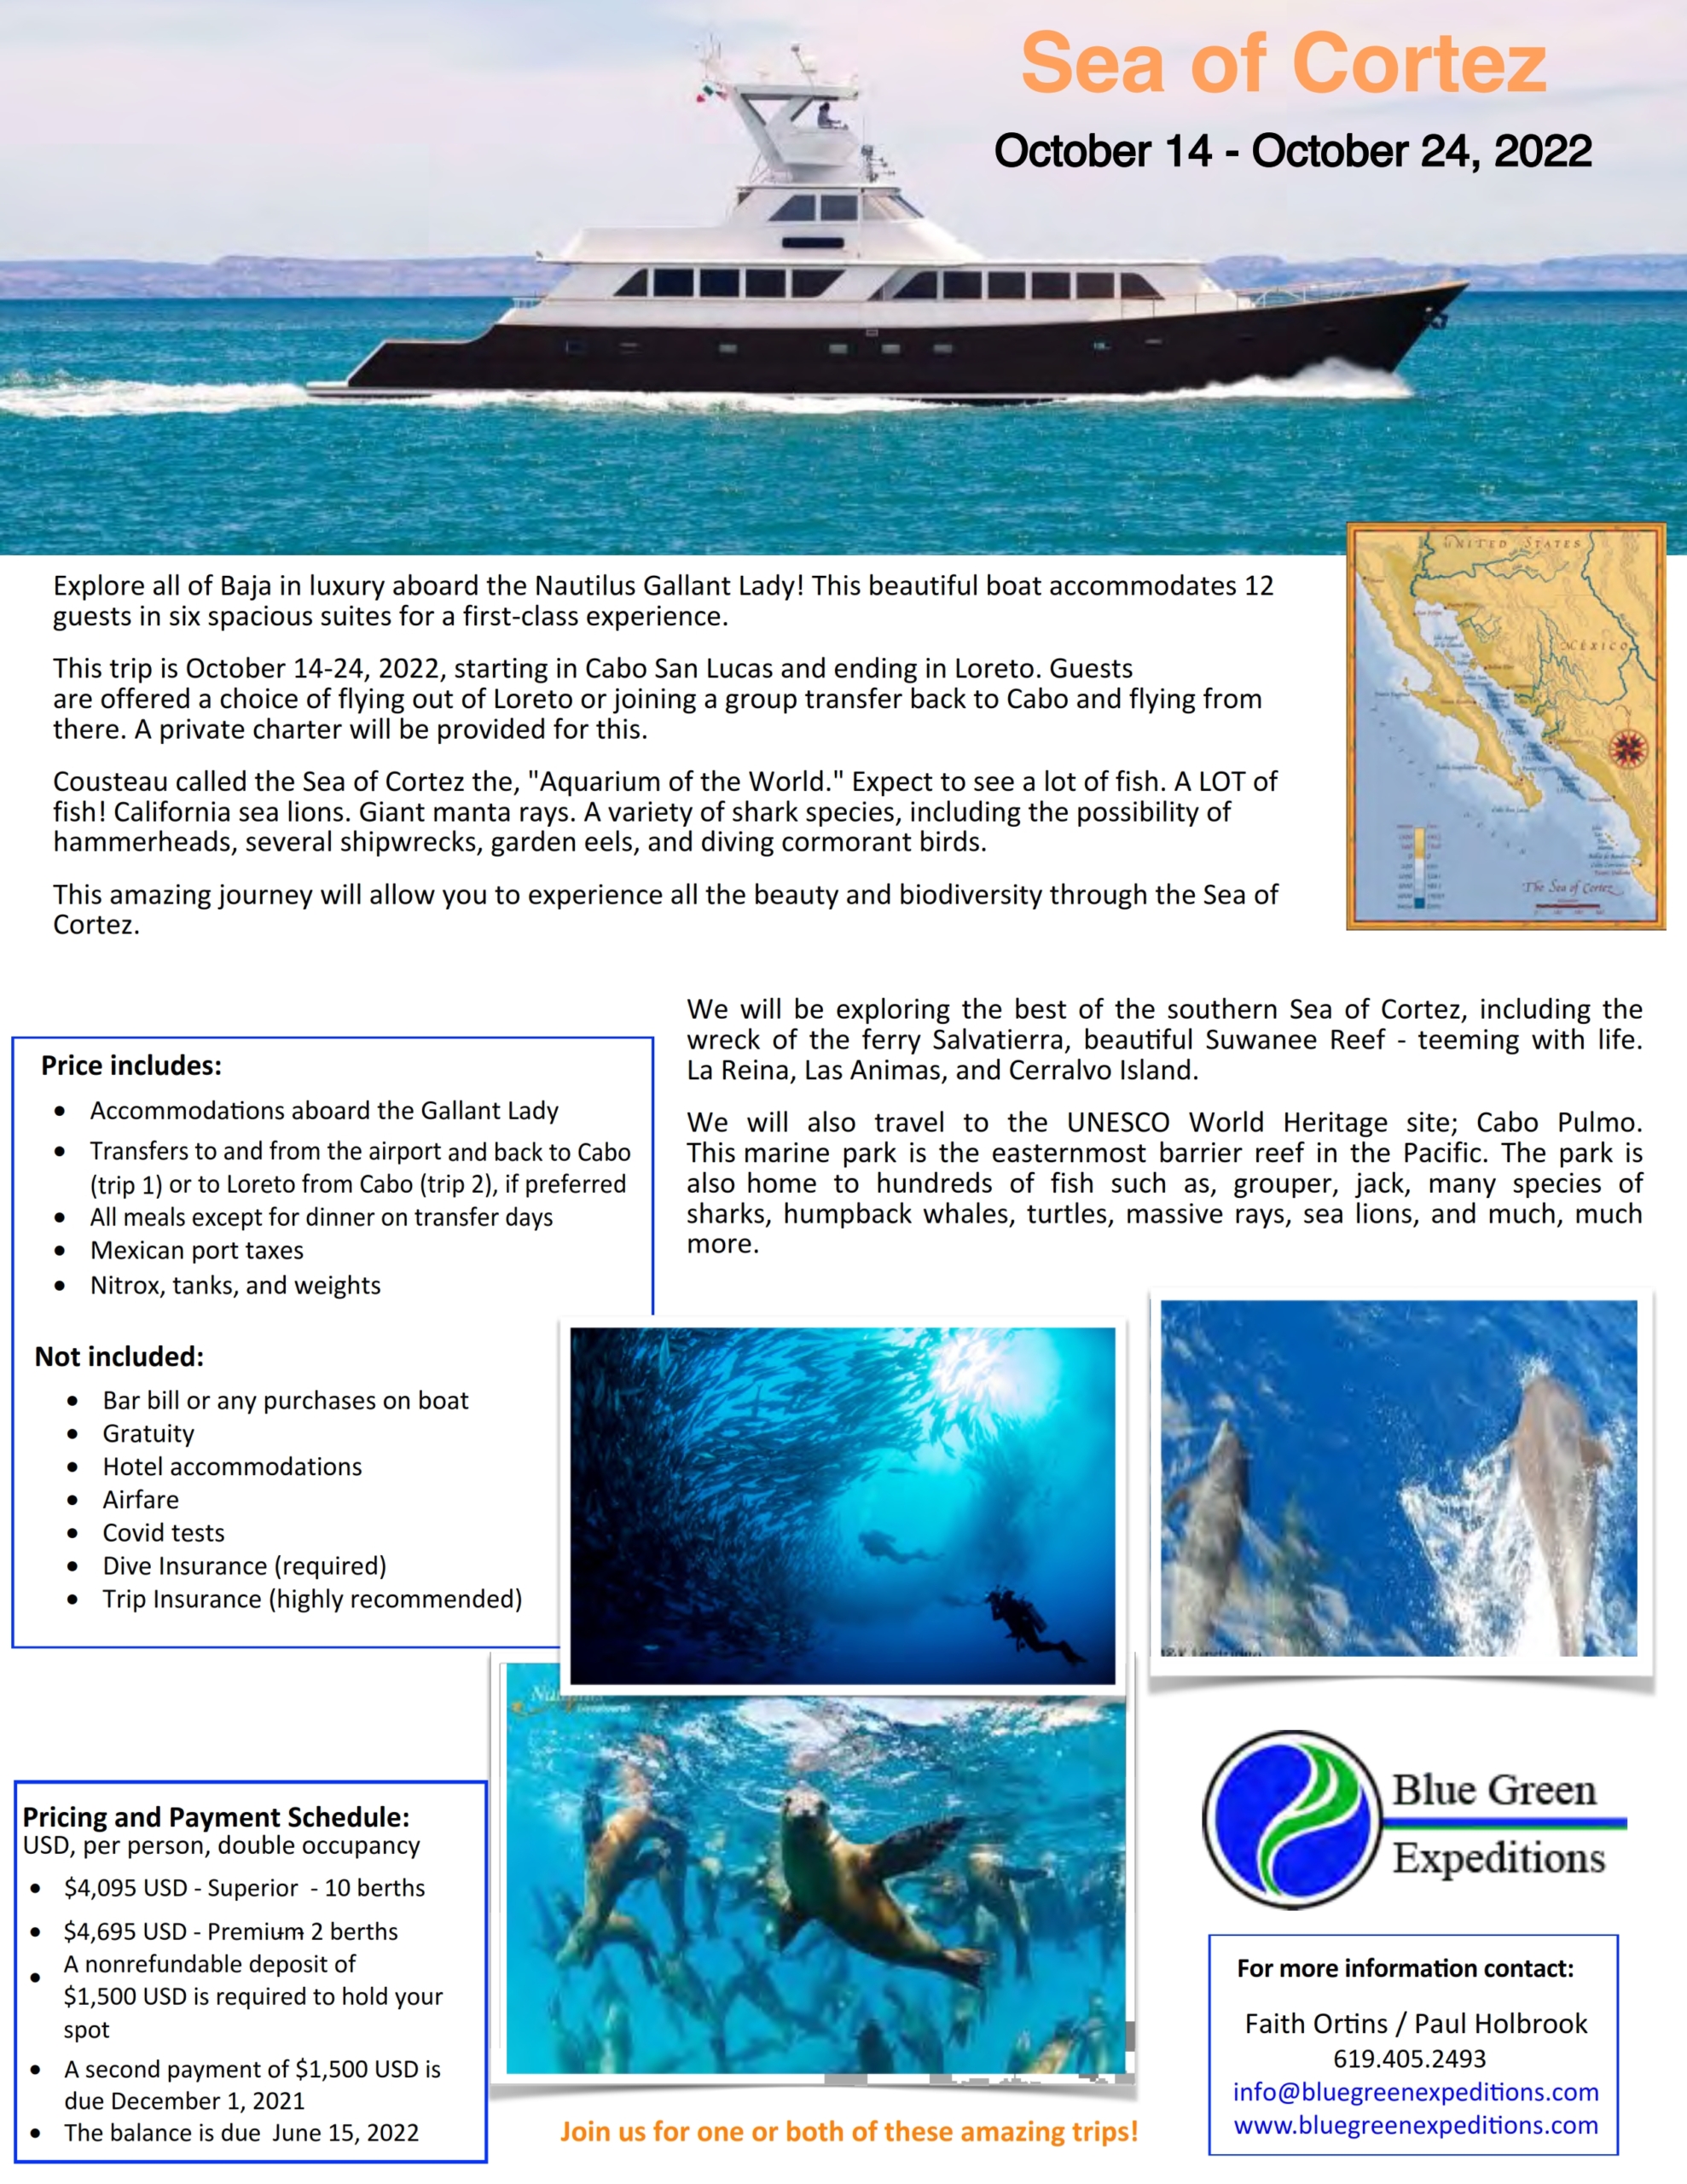 Sea of Cortez expedition: October 14 - 24, 2022